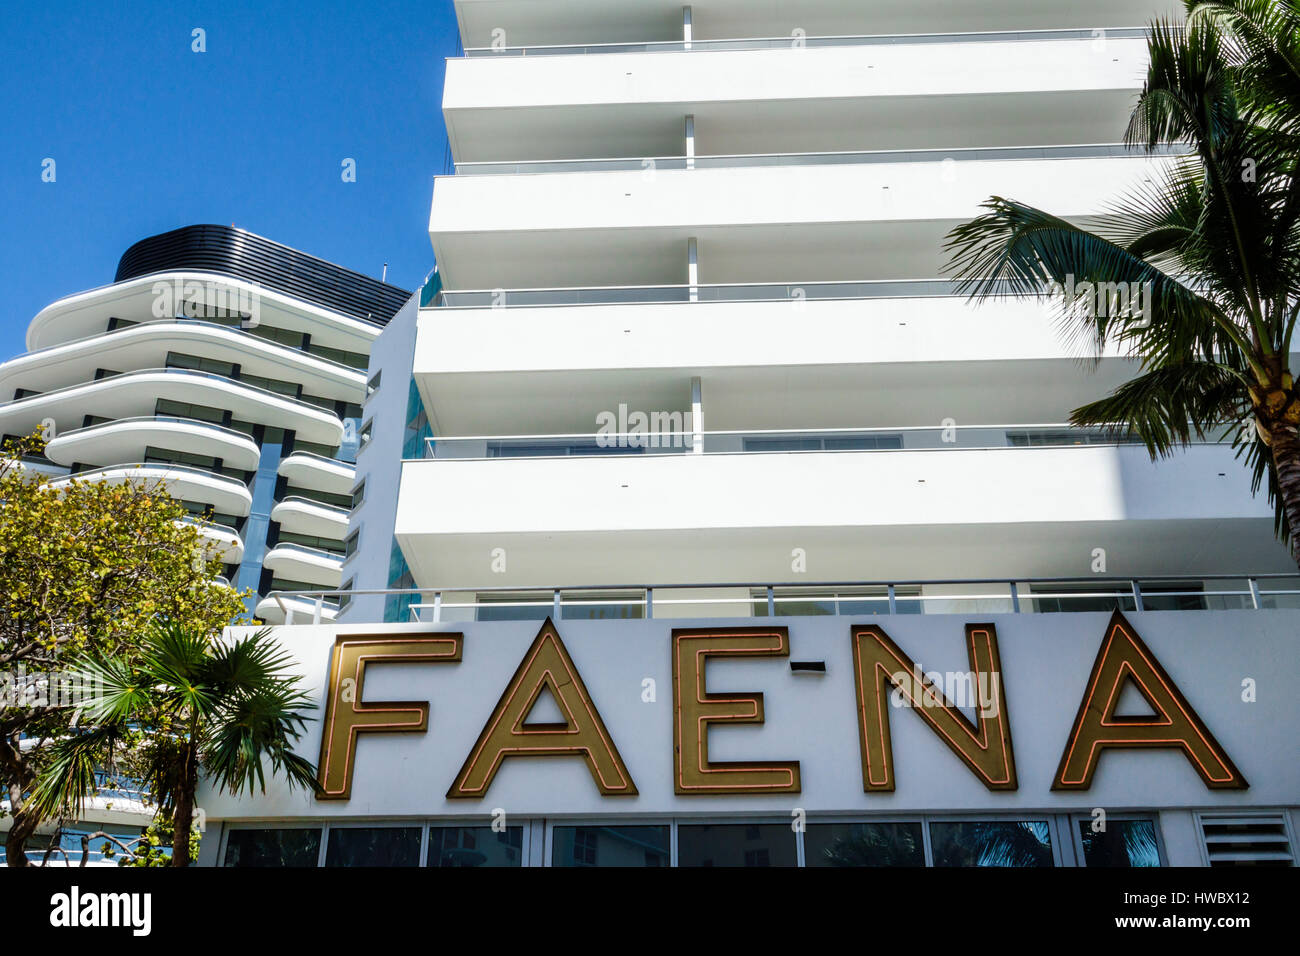 Miami Beach Florida,Faena District,Collins Avenue,Faena Hotel,Faena House,hotel,condominium residences,building,exterior,sign,balcony,luxury 5 star,FL Stock Photo